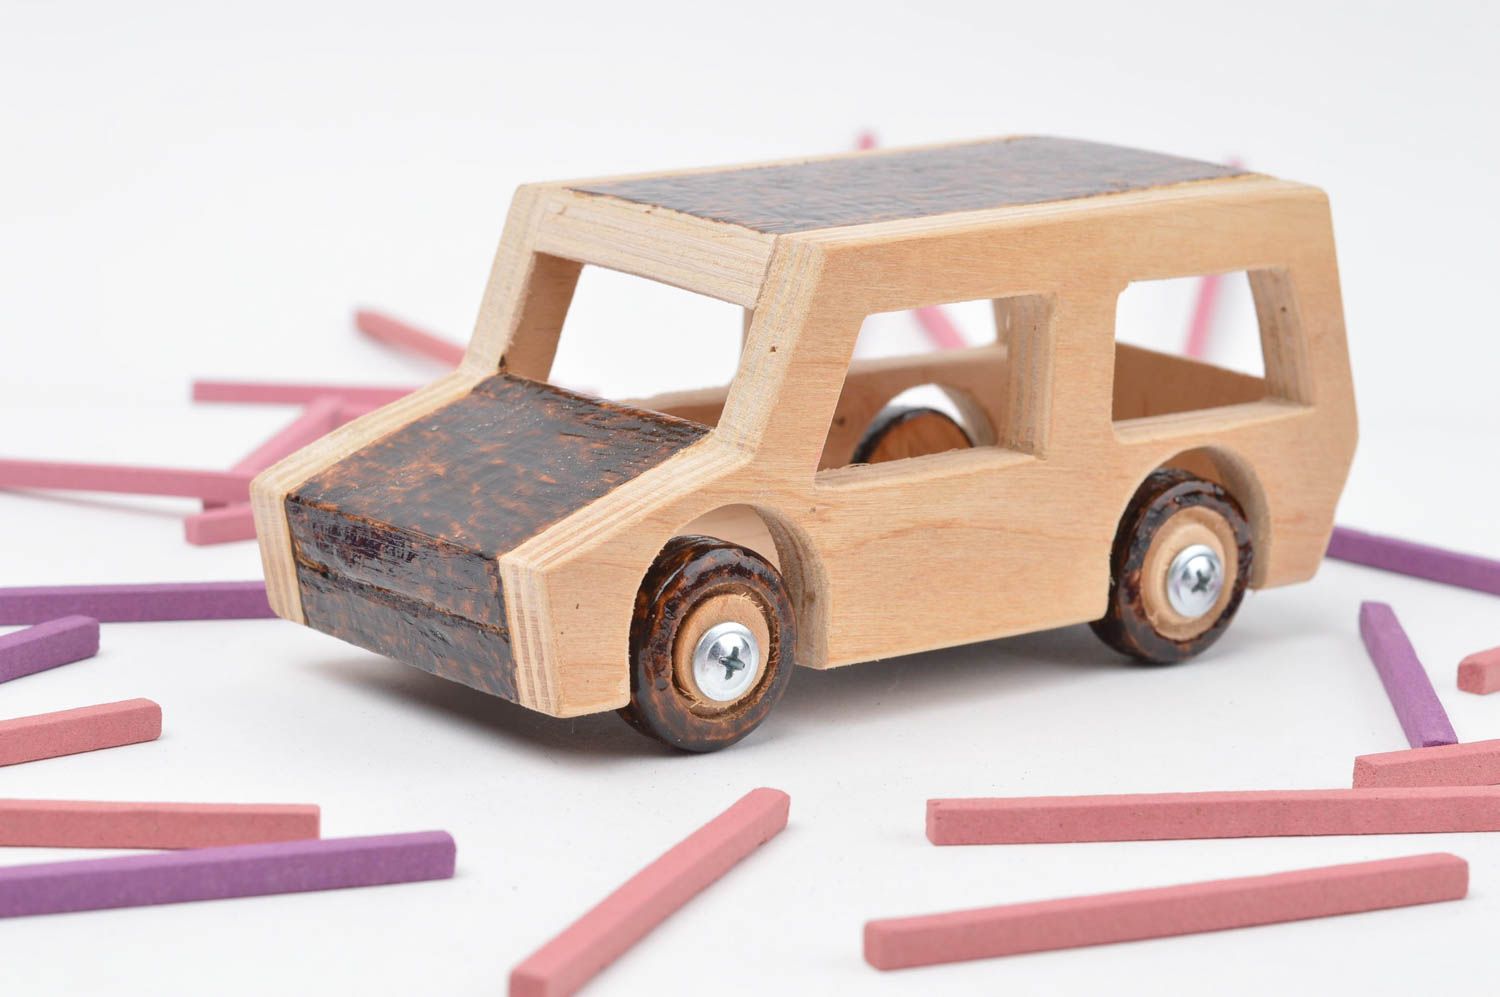 Handmade toy designer toy wooden toy handmade wooden toy nursery decor photo 1